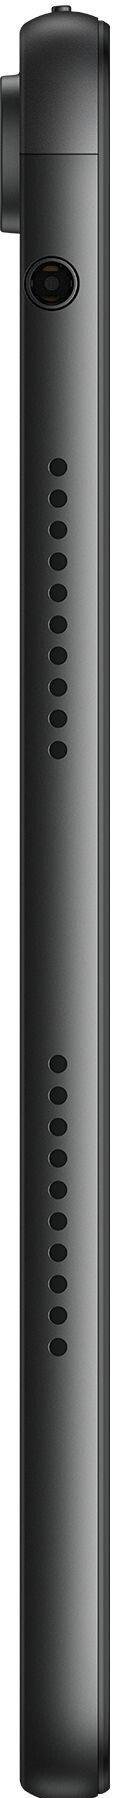 Планшет Huawei MatePad SE Graphite Black (53013NBB)